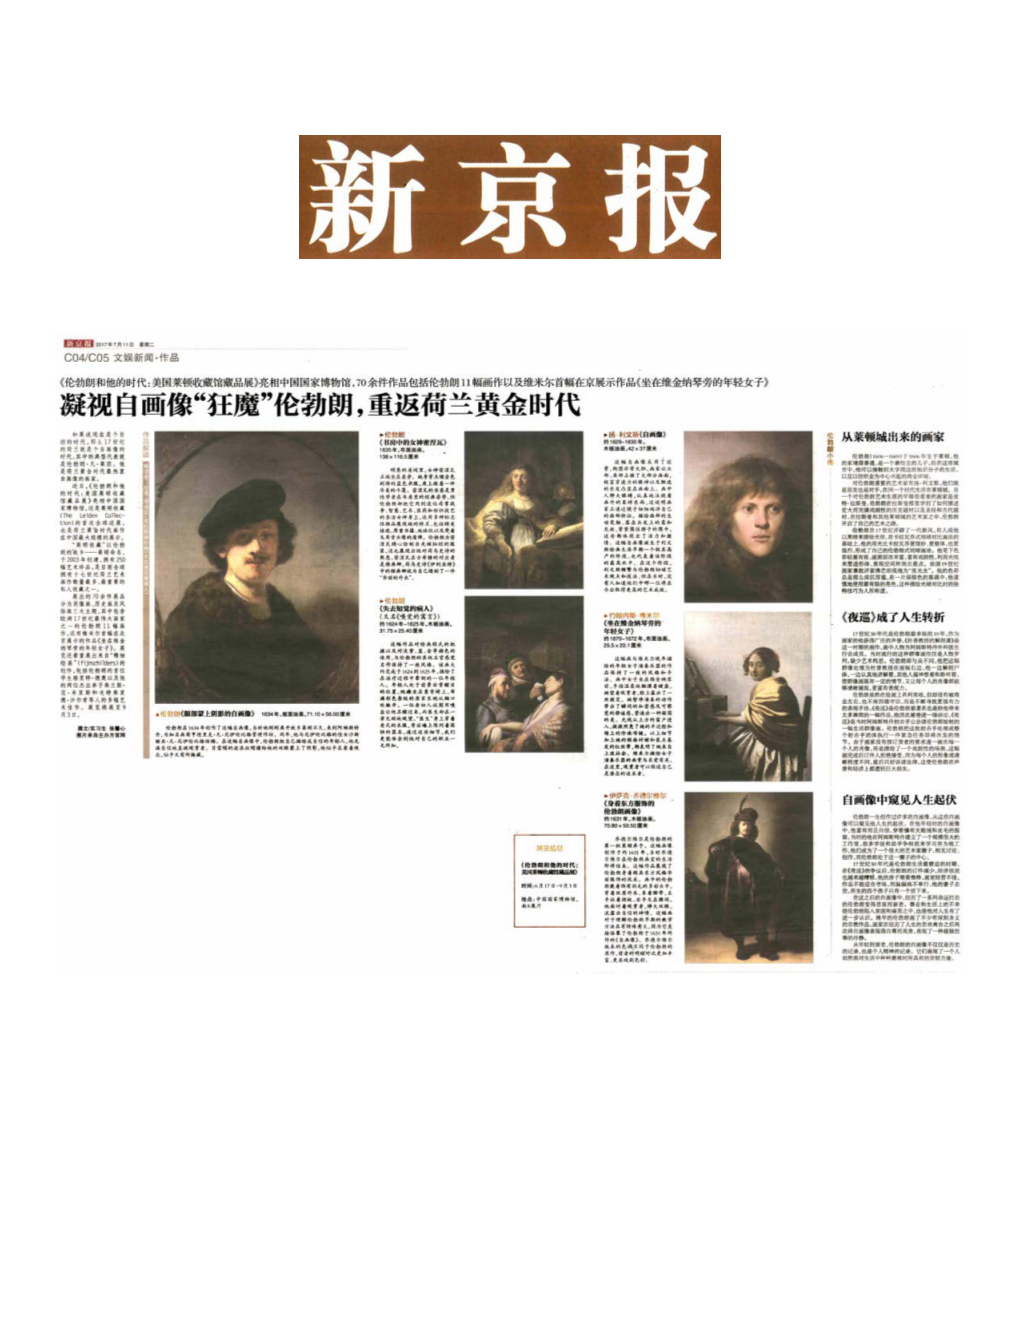 7.11.17 The-Beijing-News.Pdf